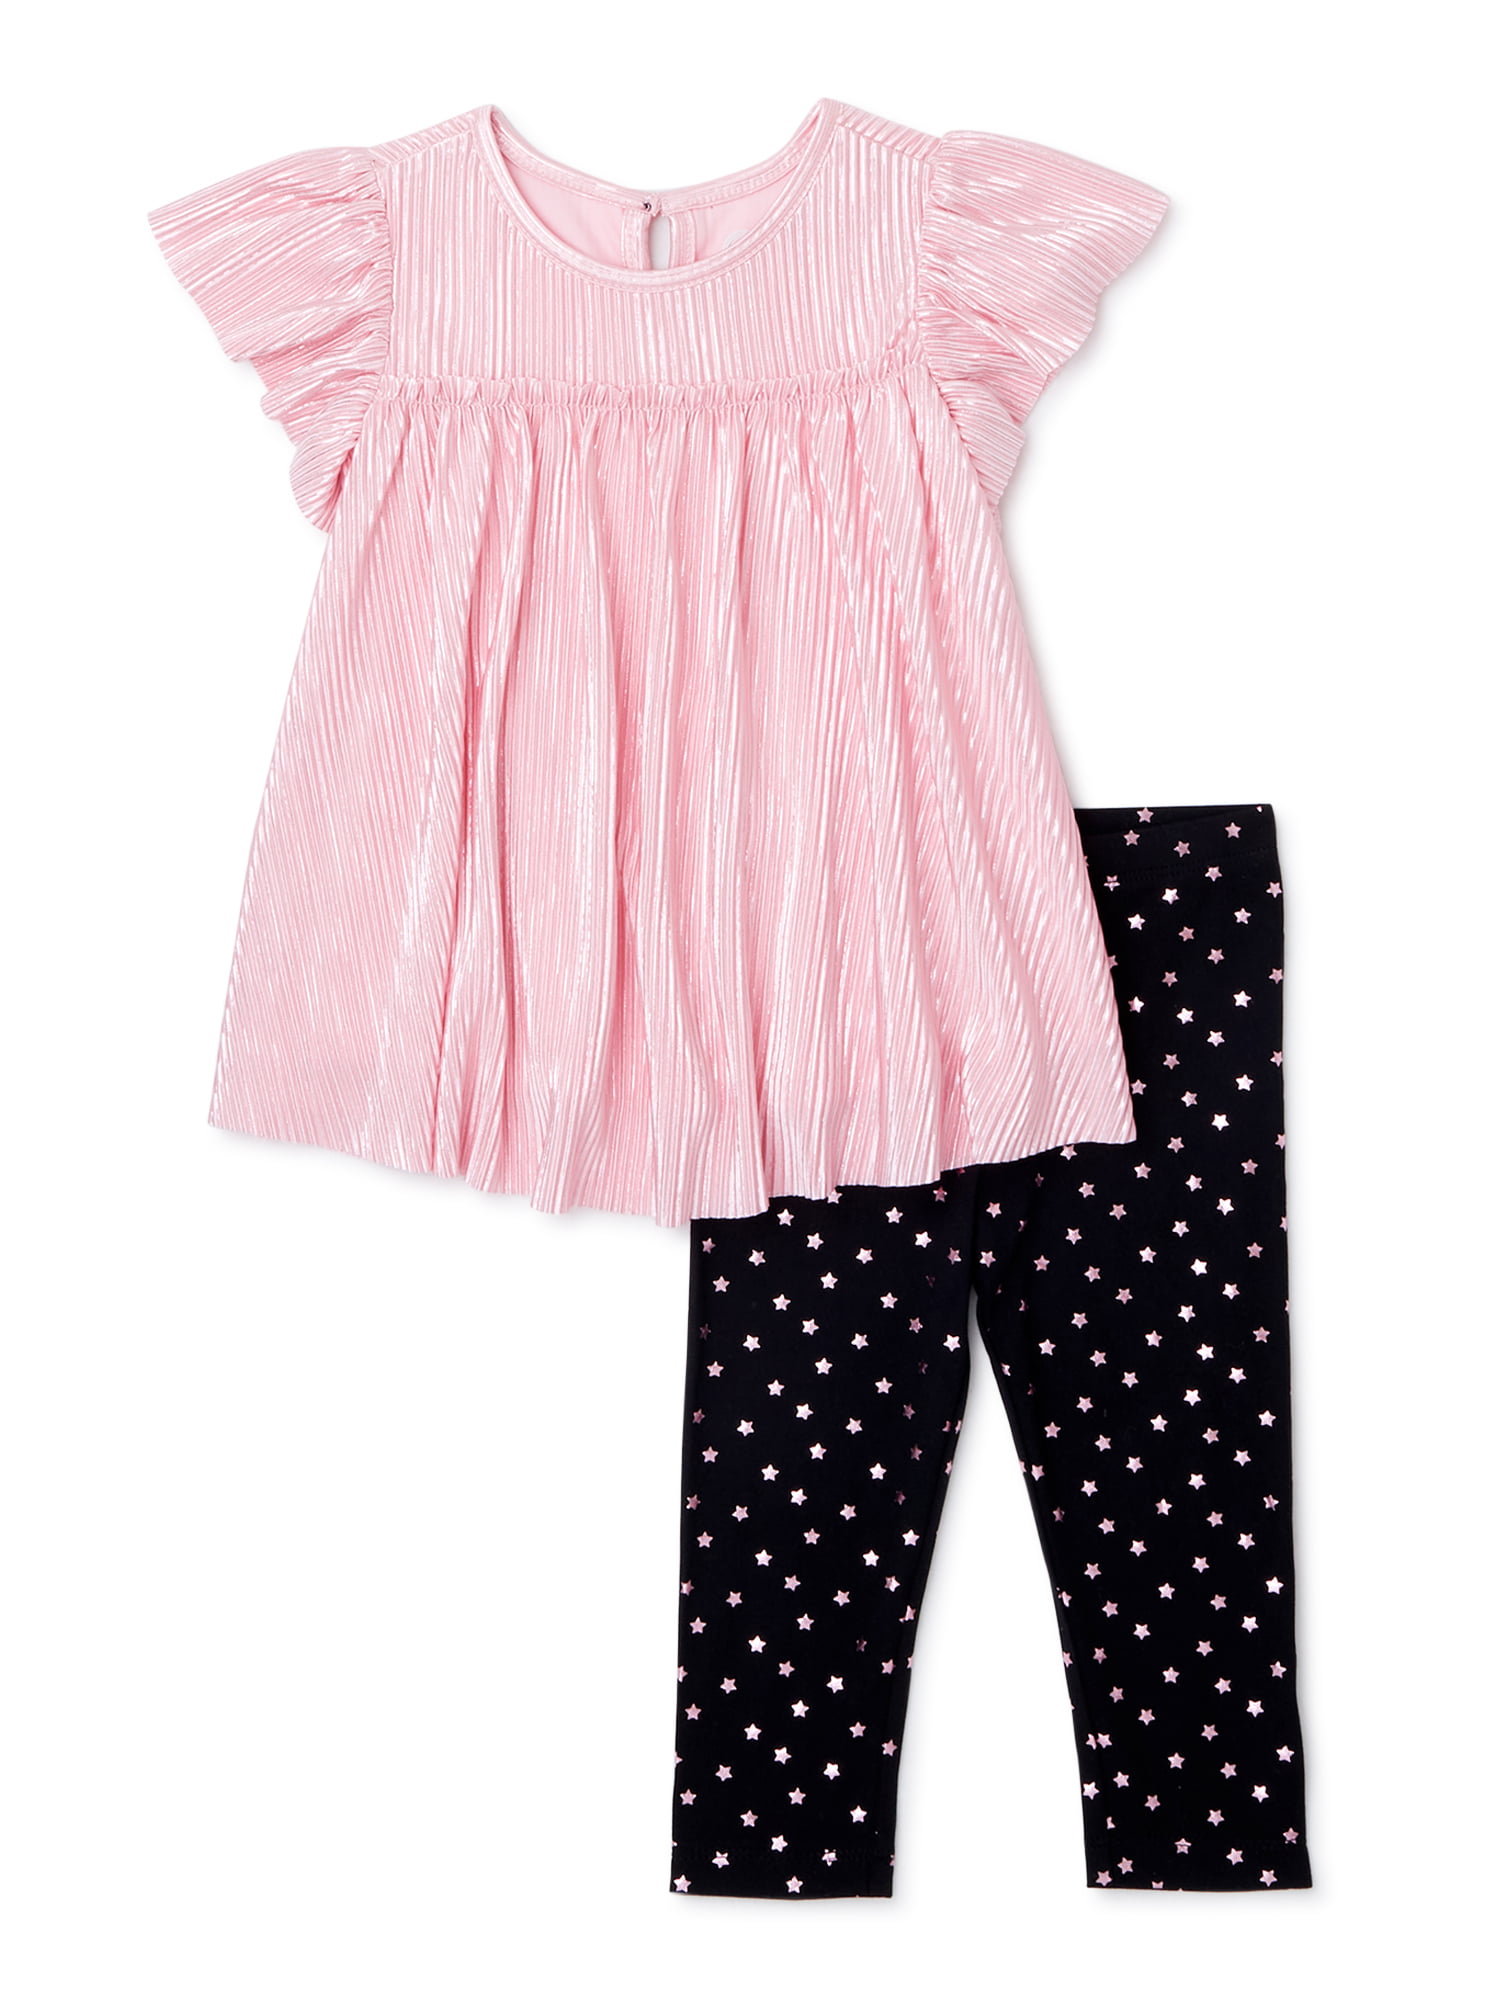 Wonder Nation Baby Girl Flutter Top & Pant Outfit, 2pc set - Walmart.com